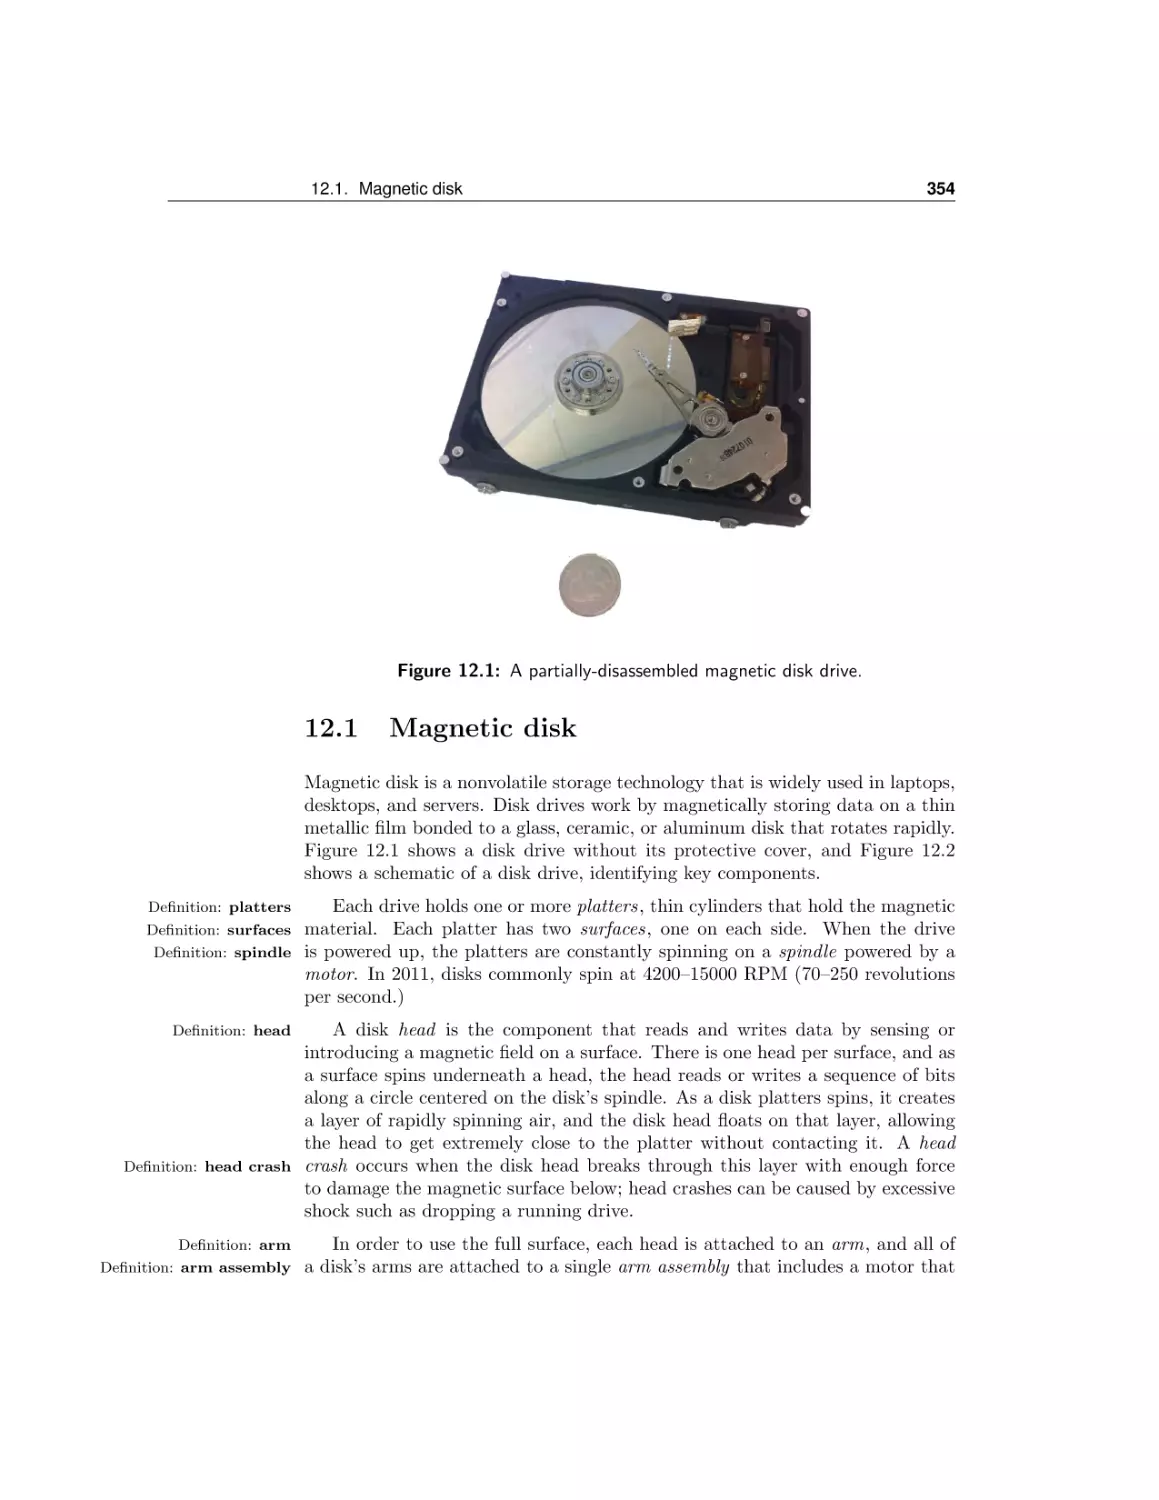 Magnetic disk